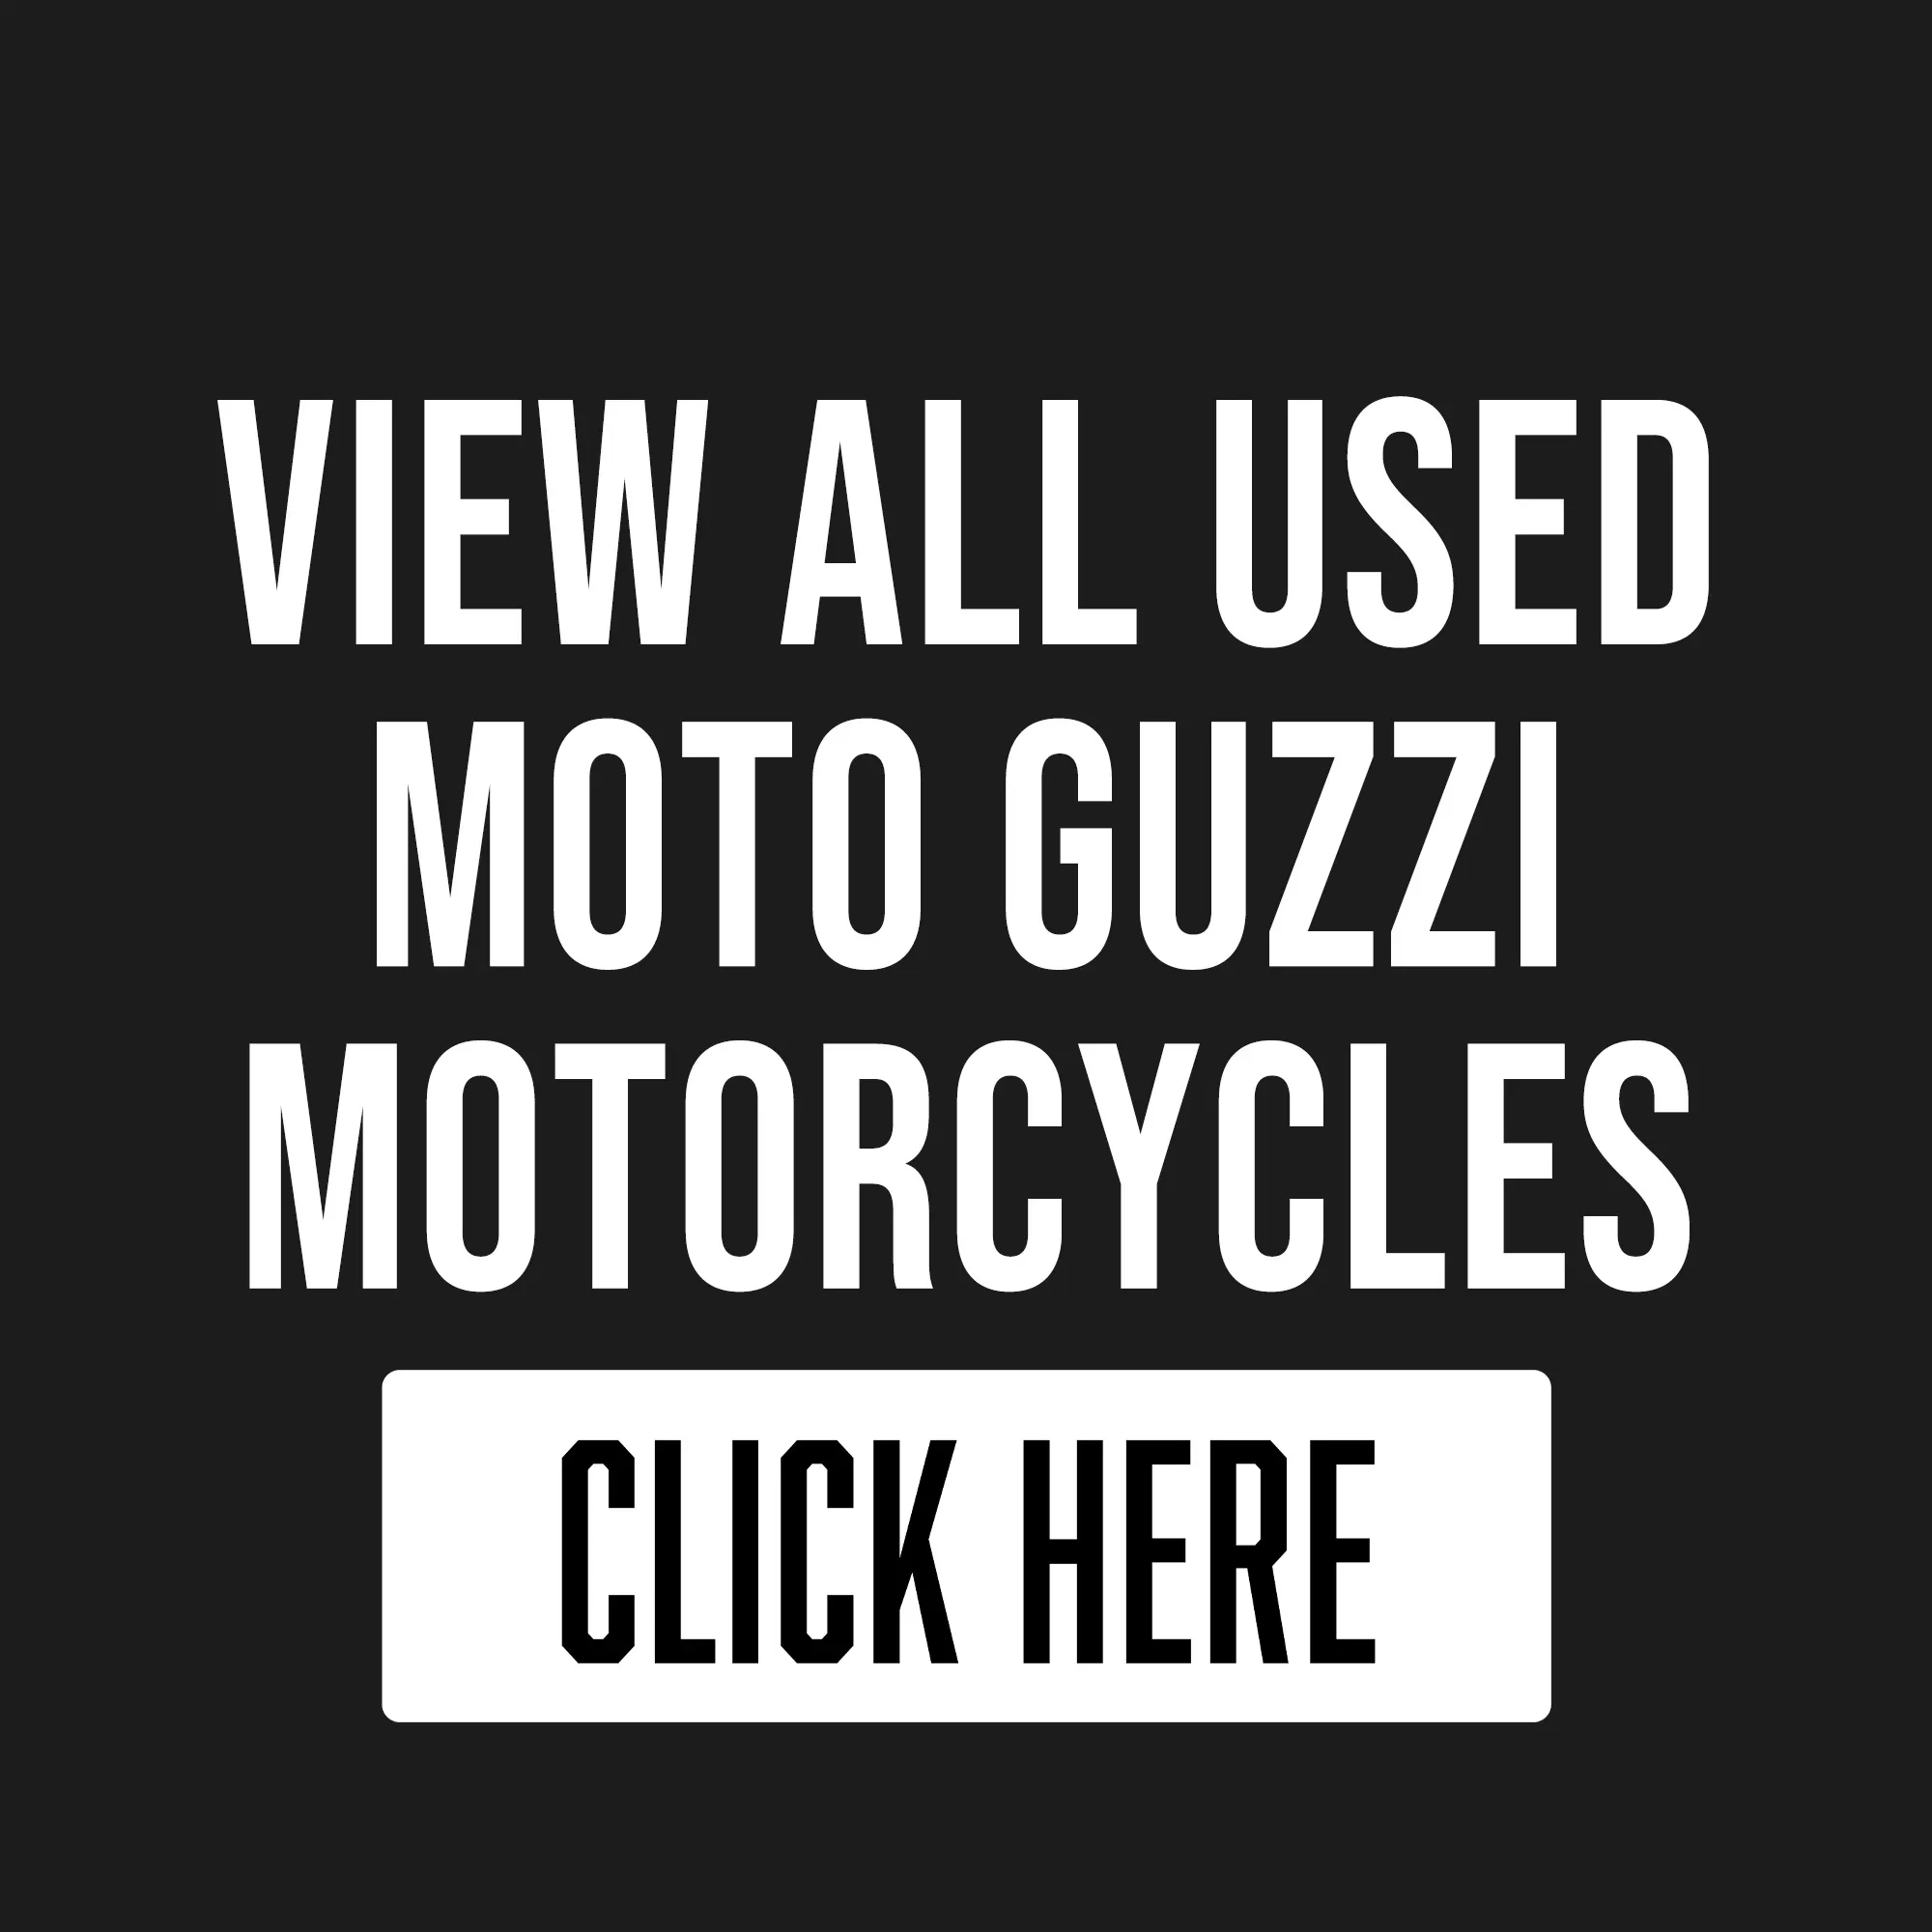 Used Moto Guzzi motorcycles